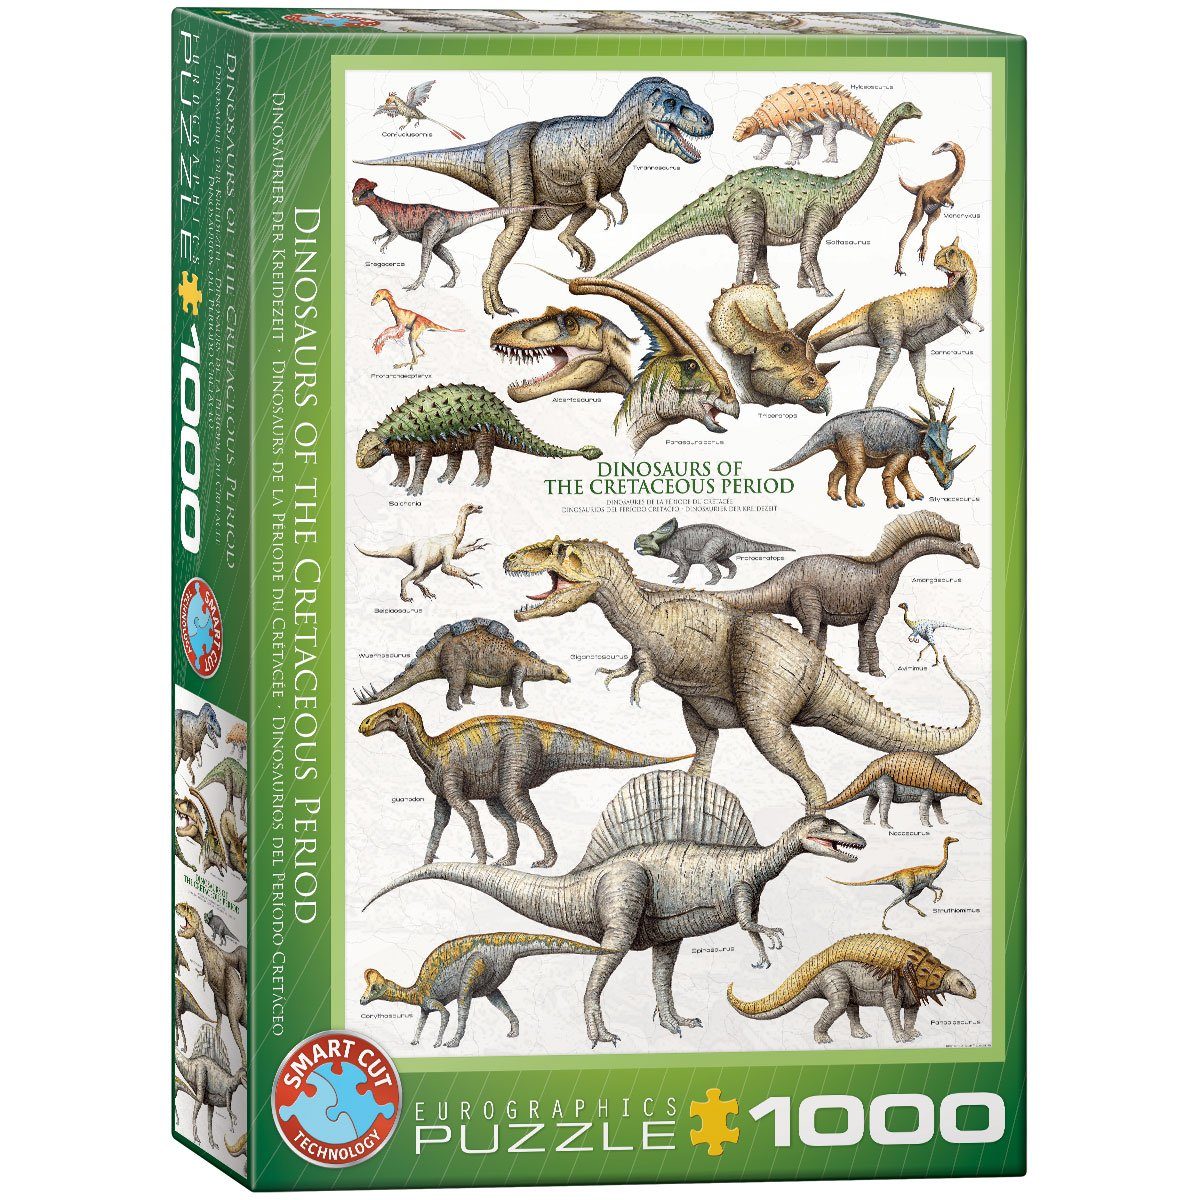 EuroGraphics 1000 der Dinosaurier Kreidezeit, Puzzleteile EUROGRAPHICS 6000-0098 Puzzle